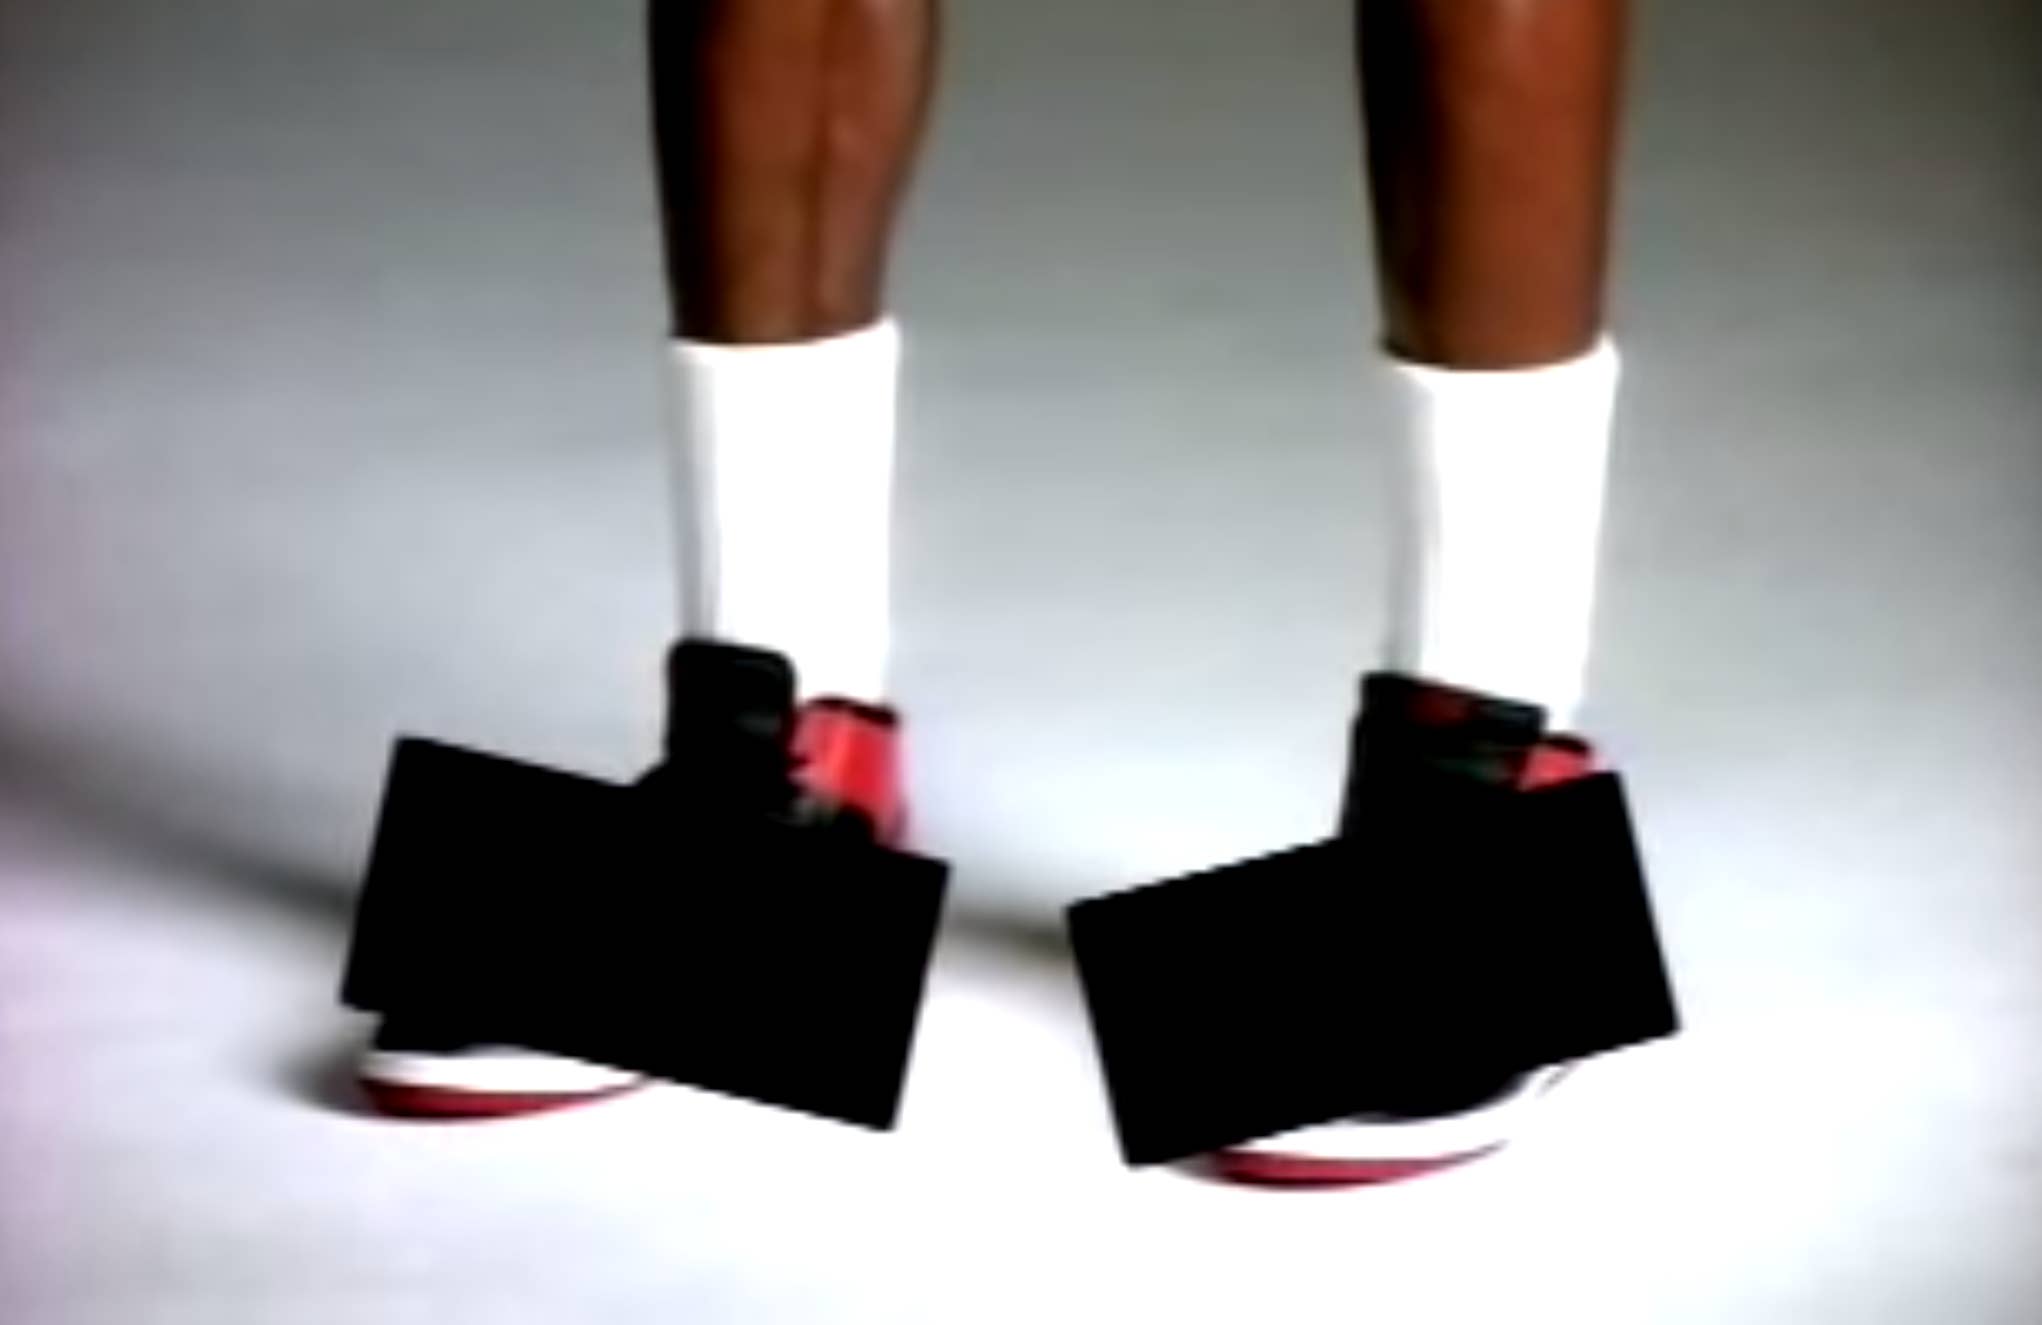 Nike Air Ship: the Original Air Jordan 1, Explained